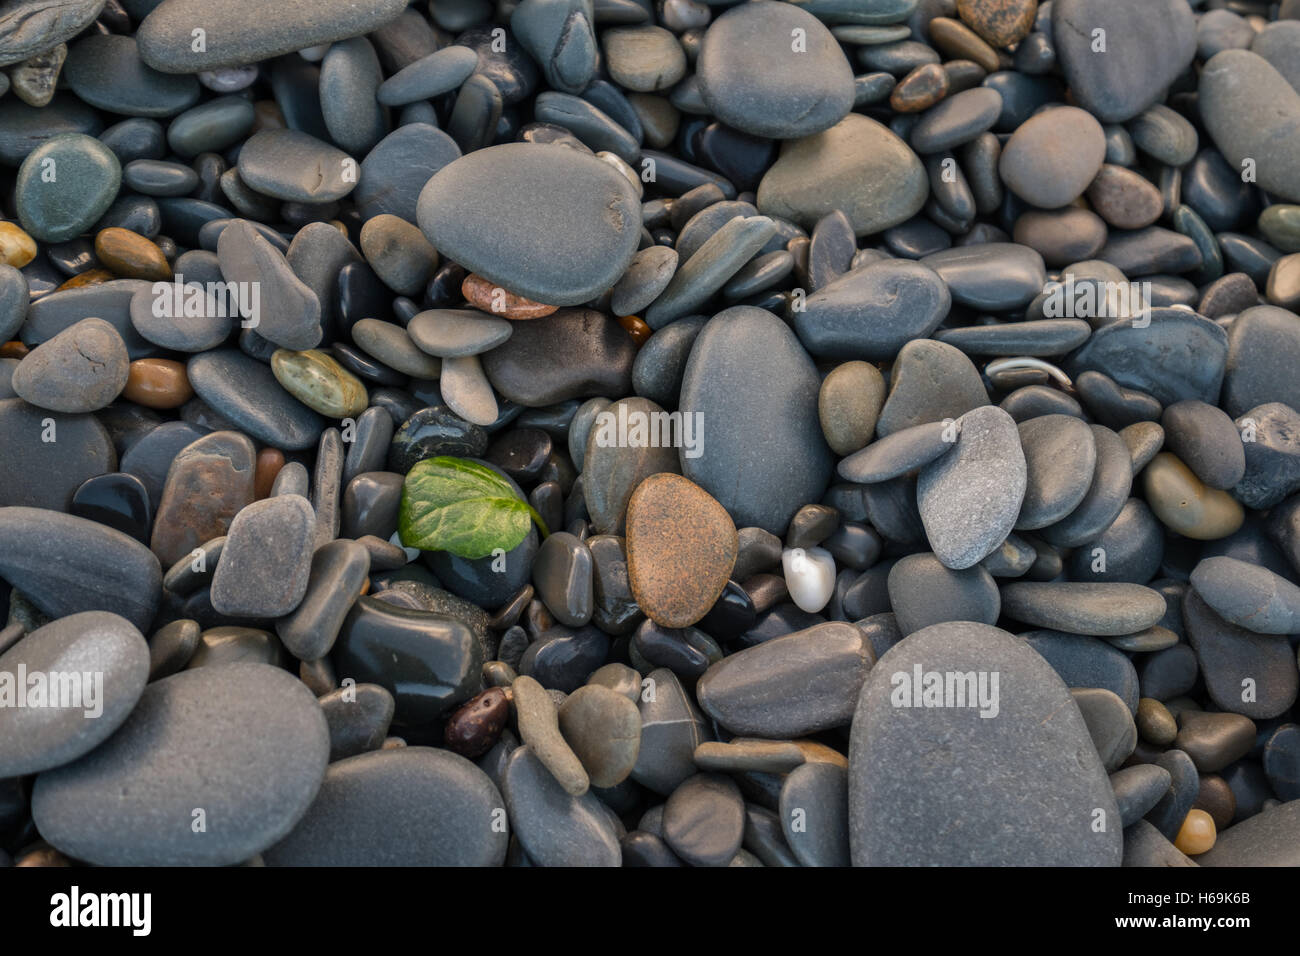 a leaf amongst the pebbles Stock Photo